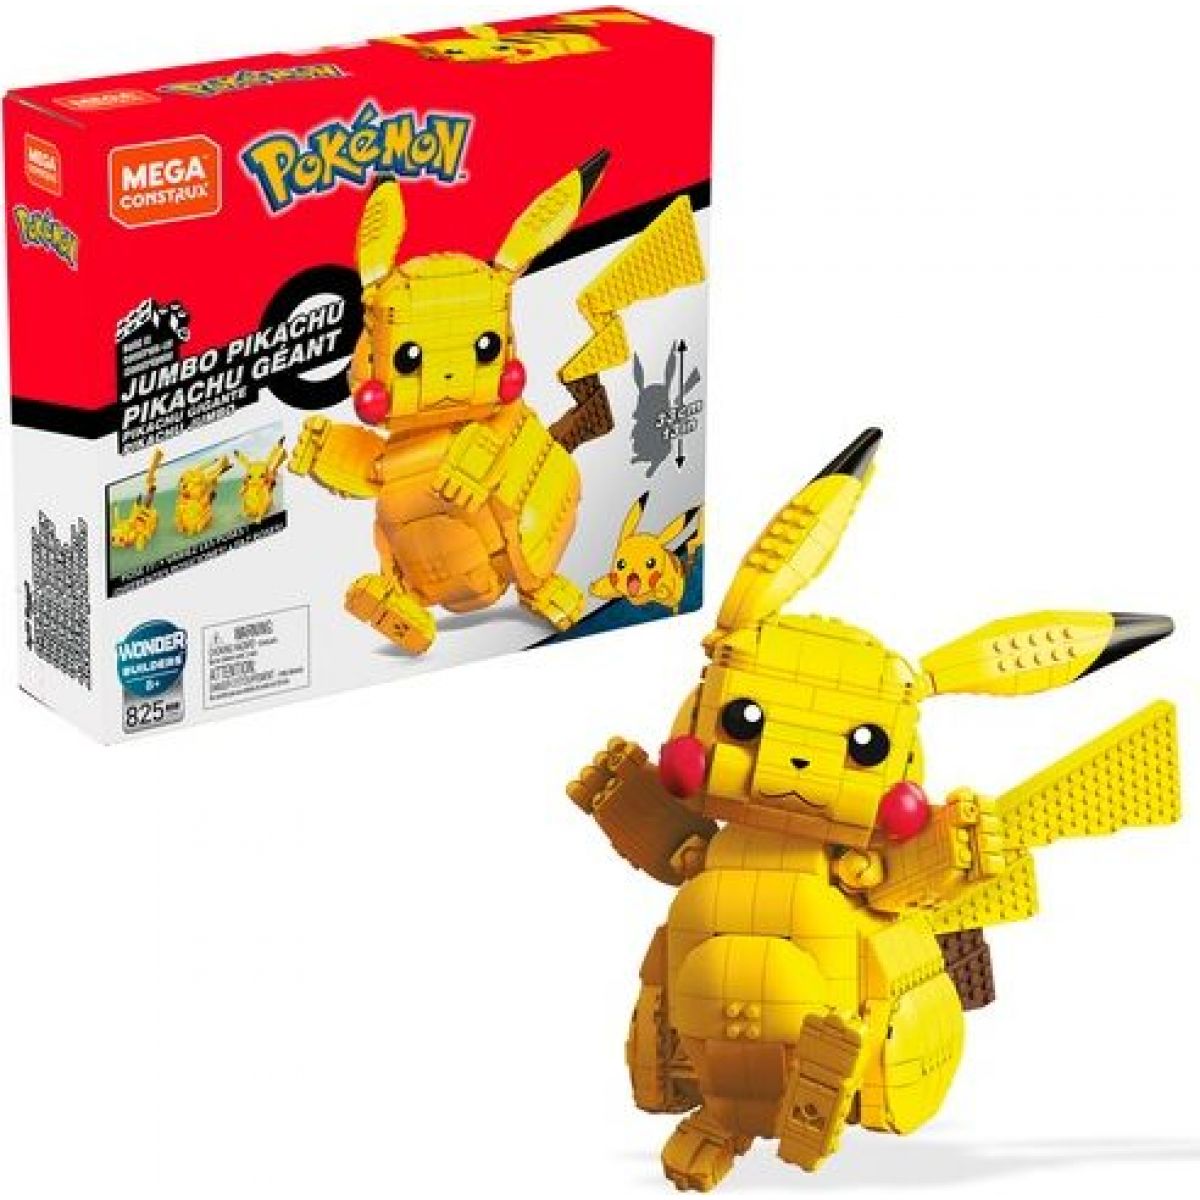 Mega Construx pokémon - jumbo pikachu